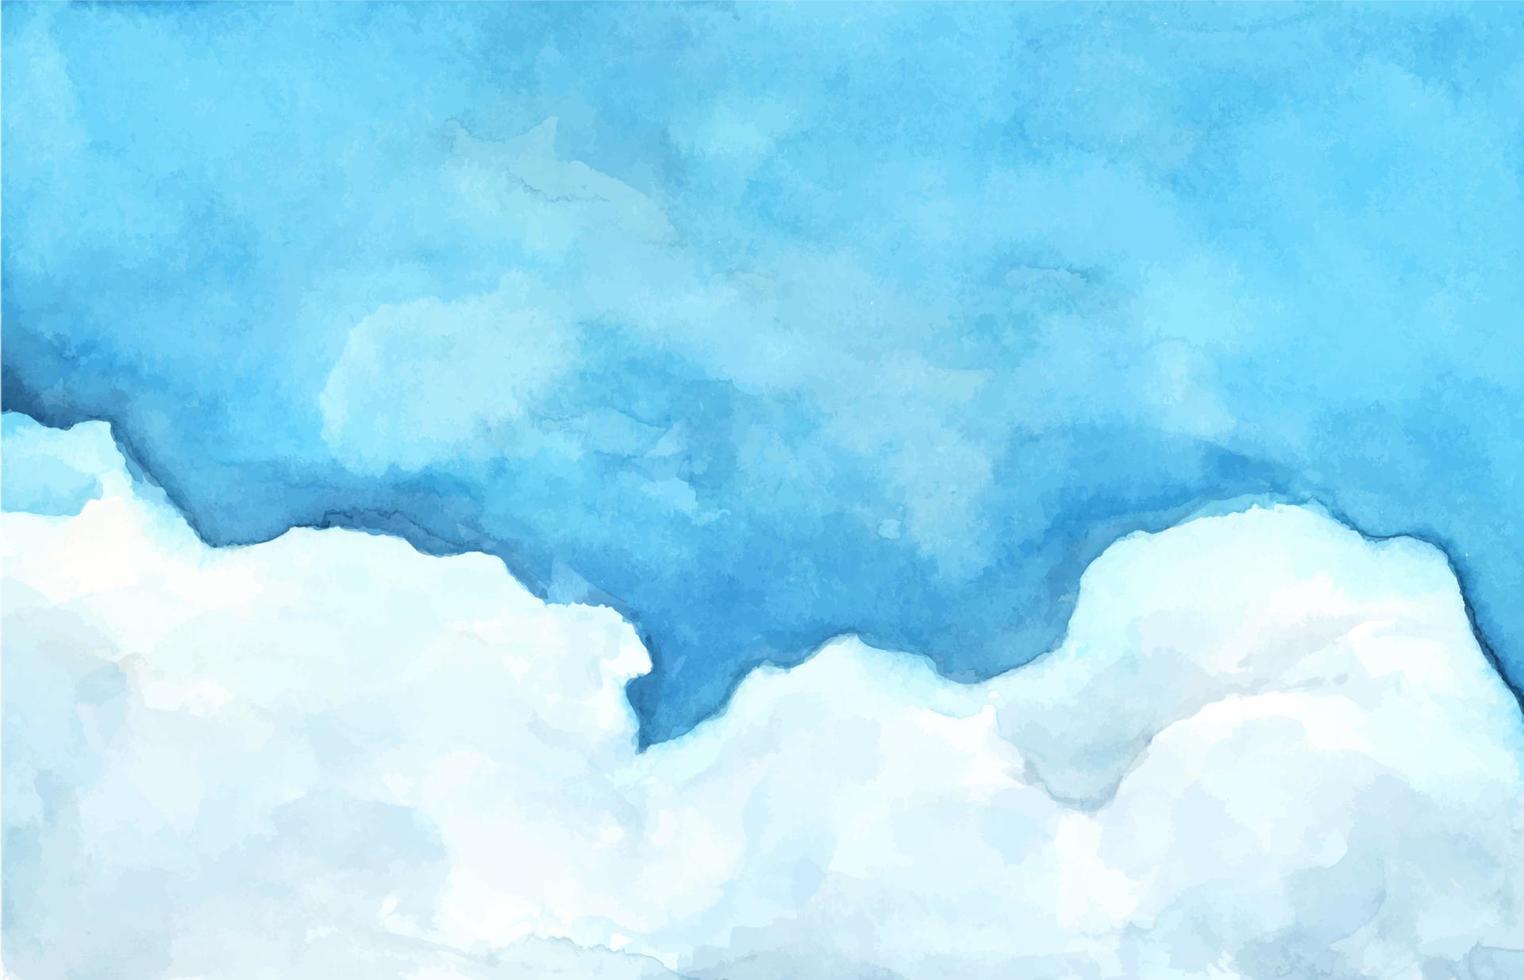 blauer himmel mit wolken, aquarellillustration. vektor